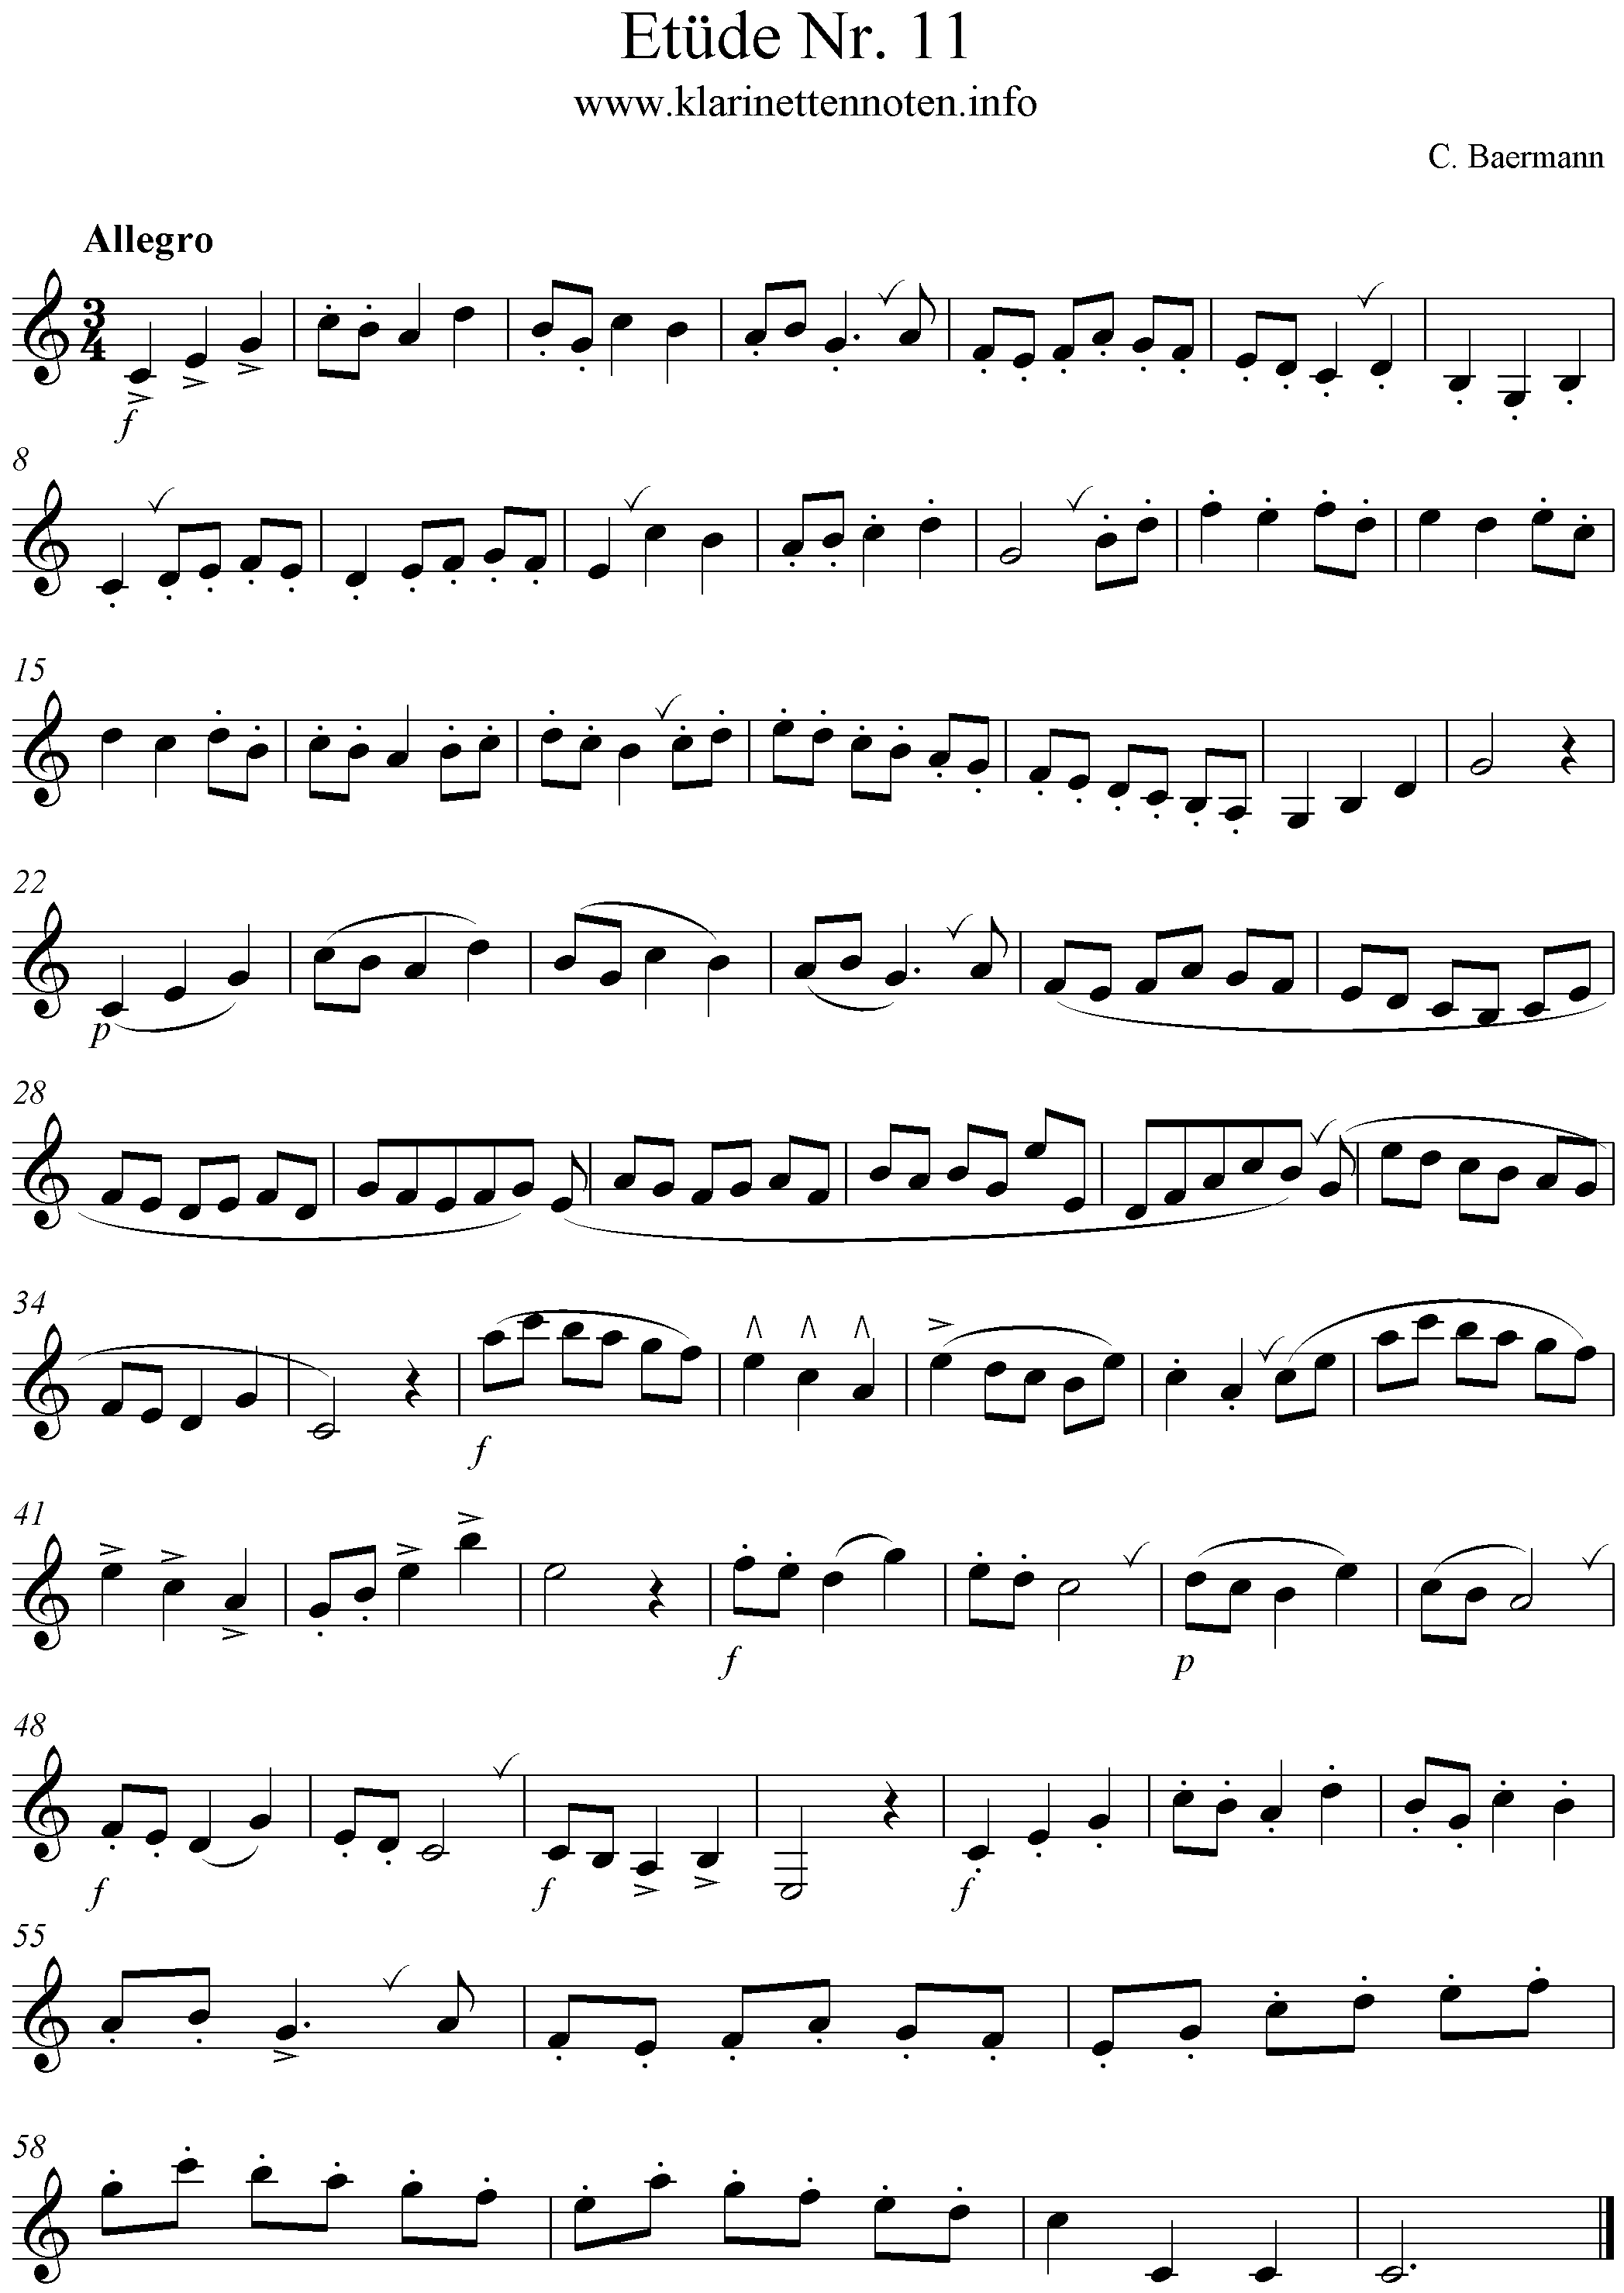 Baermann Etüde JMLA A Nr. 11, C-Dur Allegro